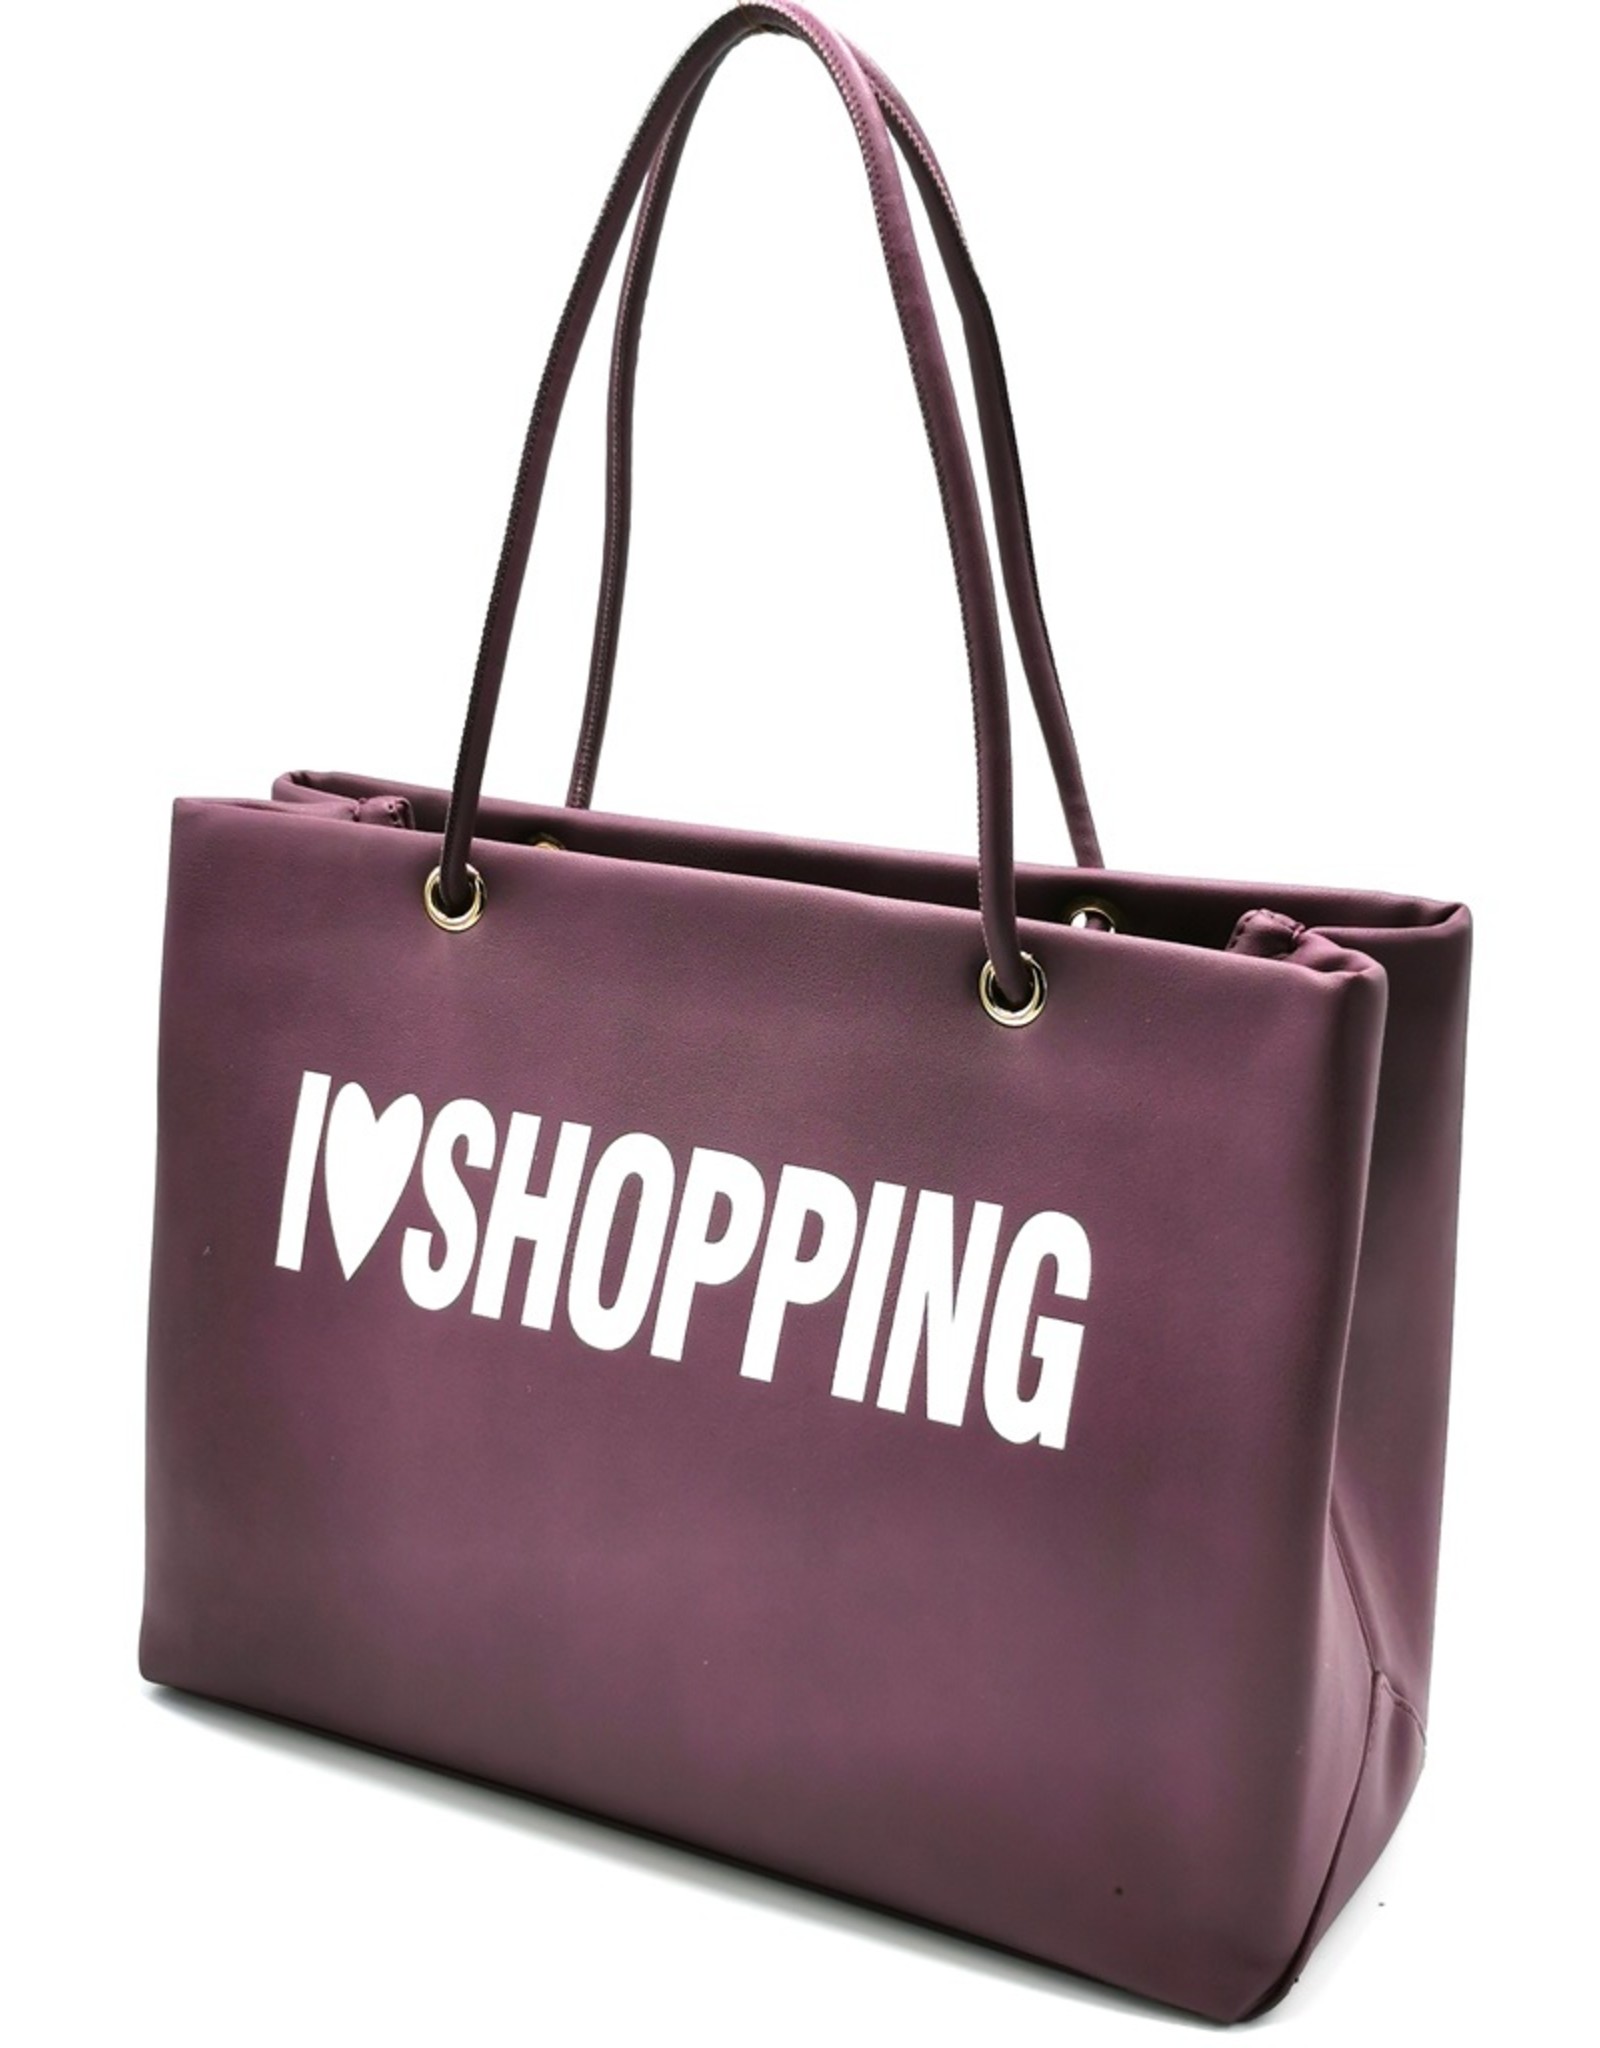 Briciole Handbags - Briciole Handbag I love shopping